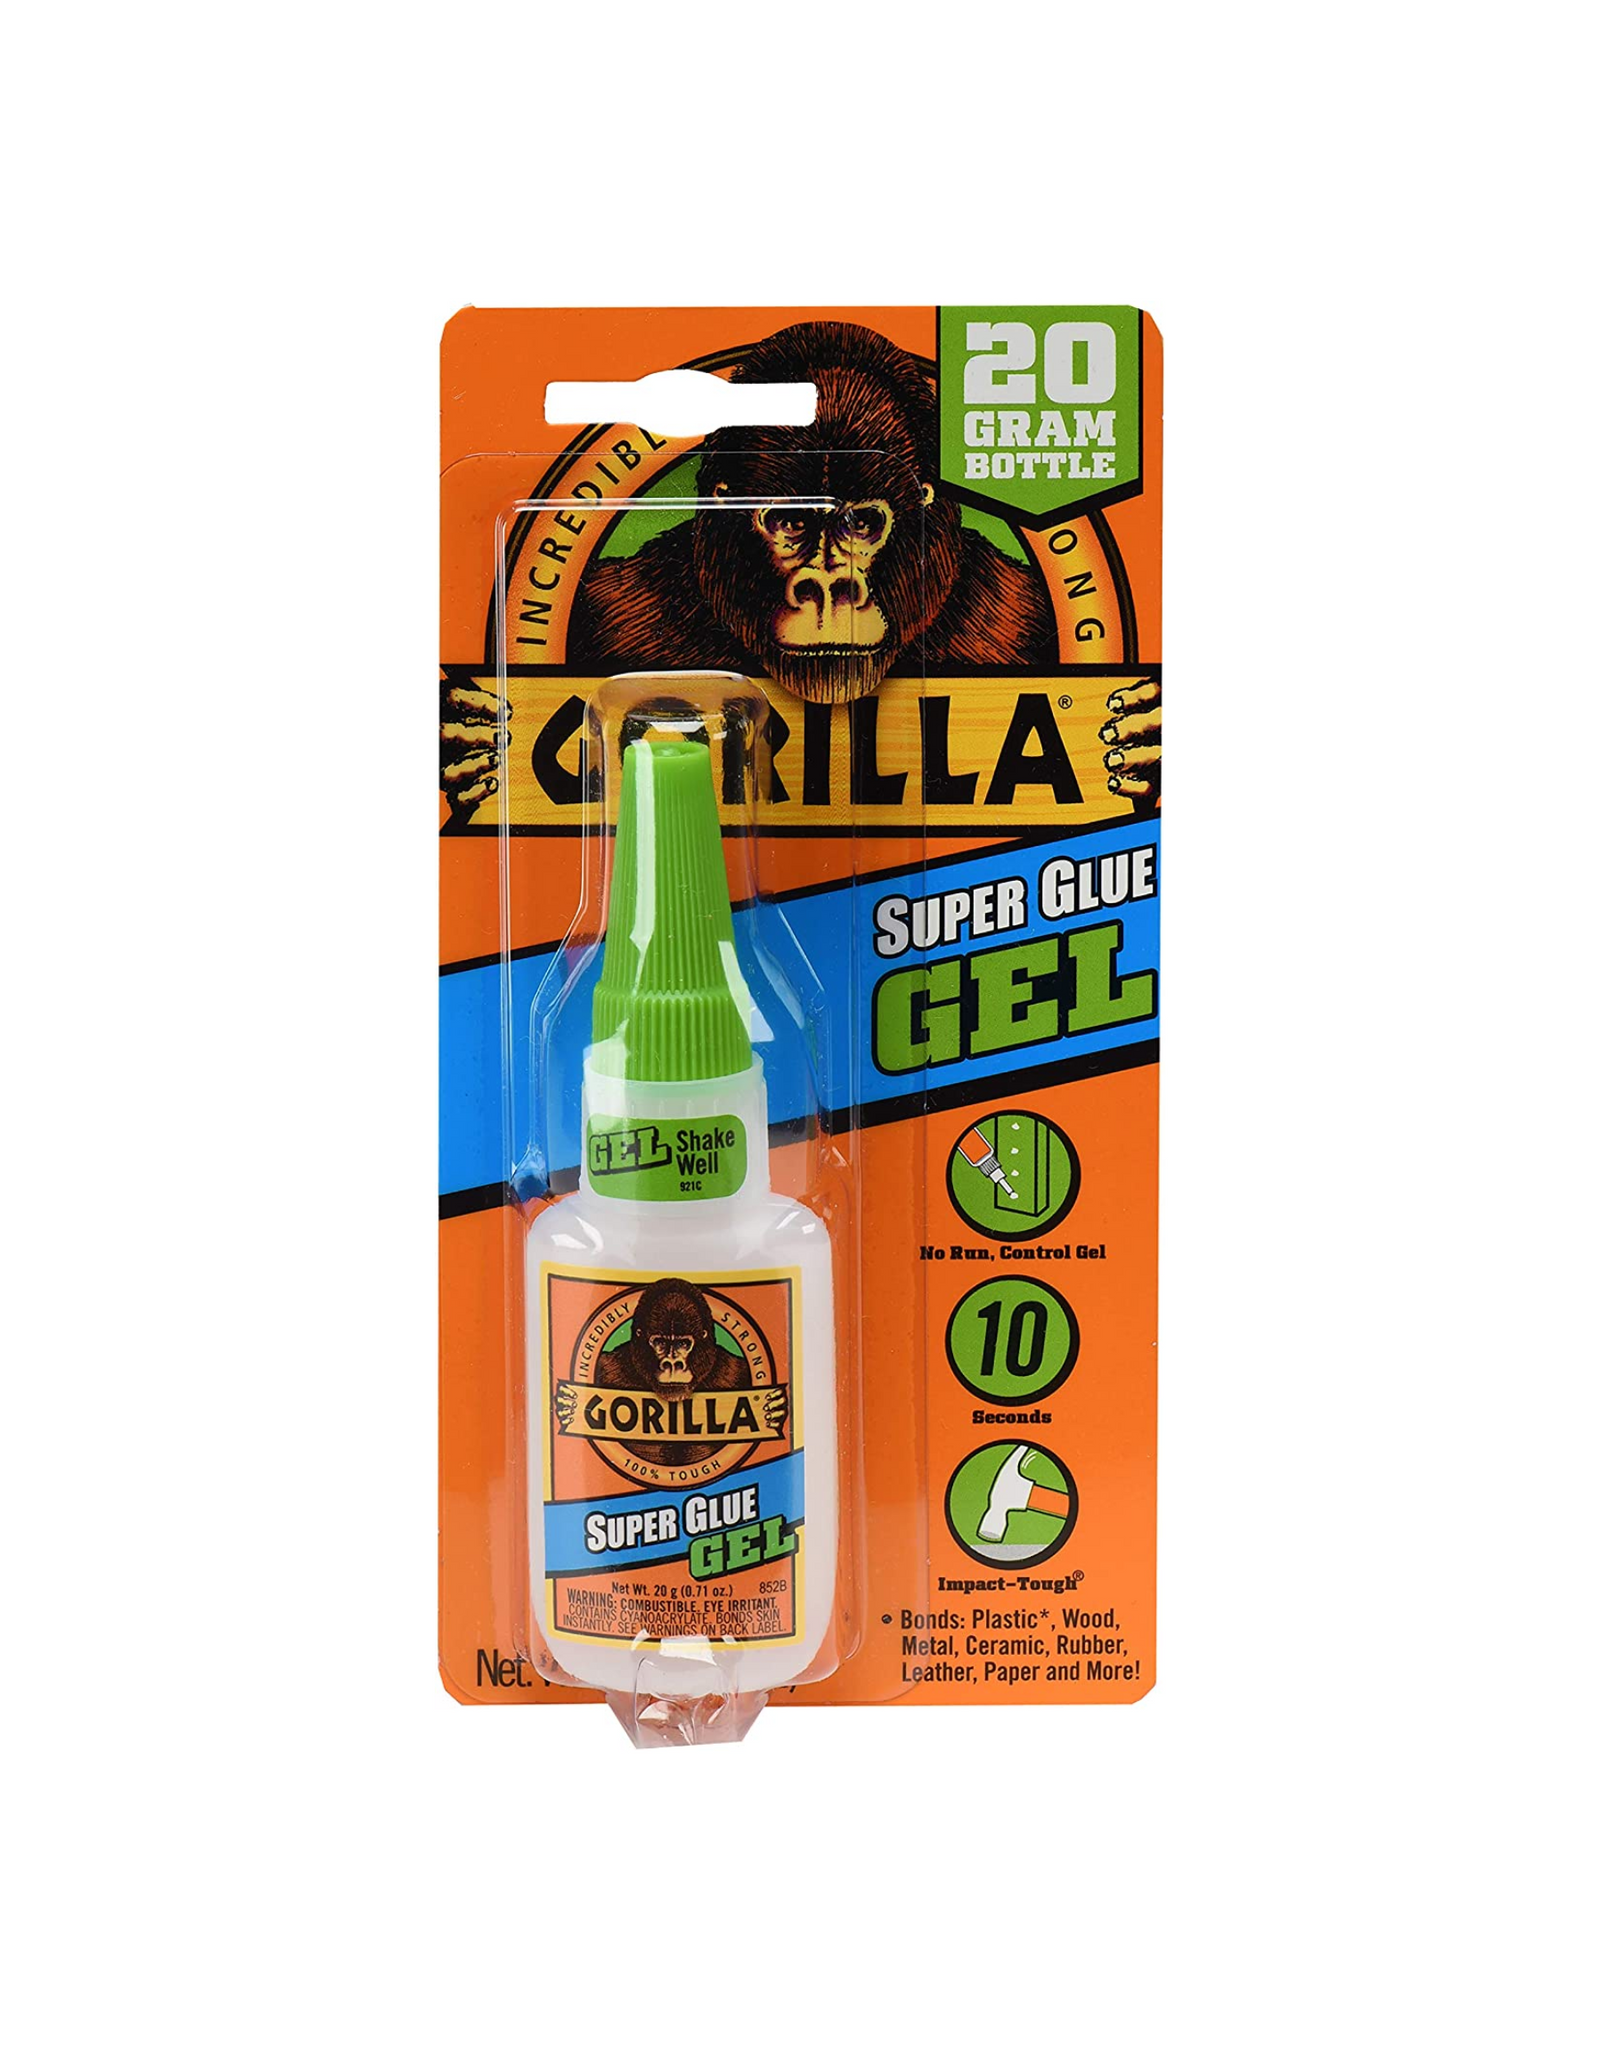 Gorilla Super Glue Gel, 0.71 oz (20 Gram), Pack of 1